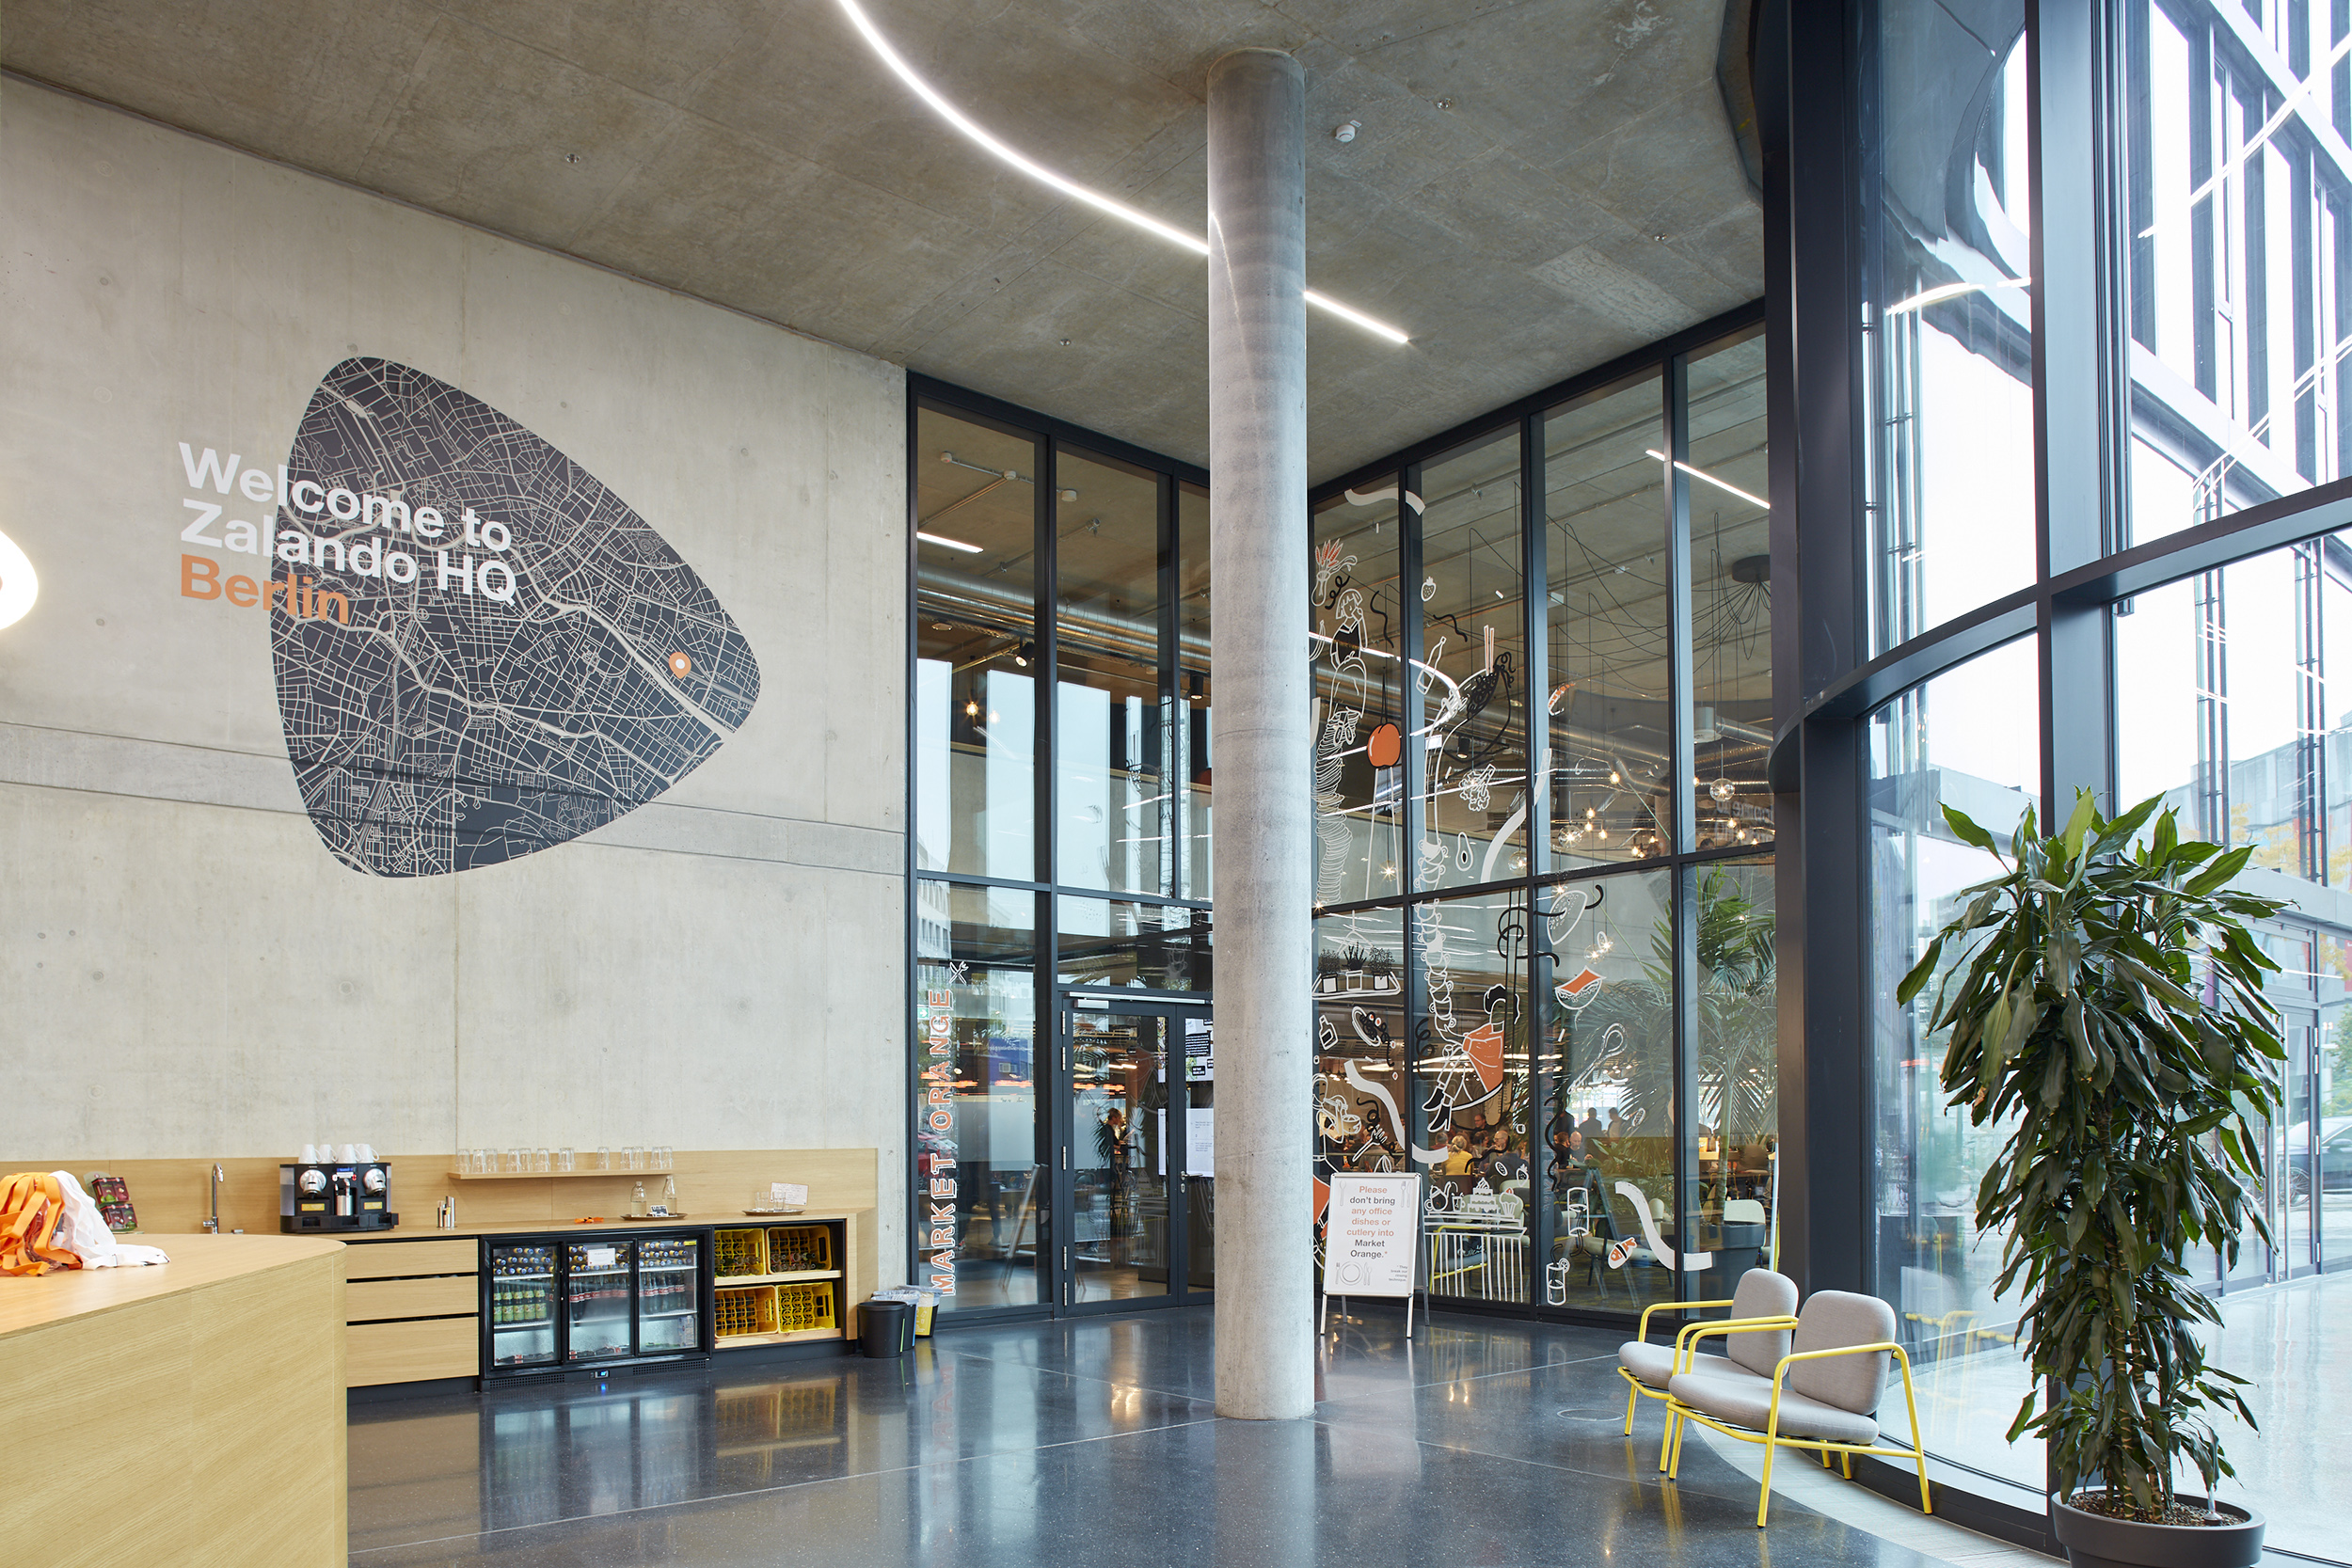 Entrance area of Zalando Berlin HQ